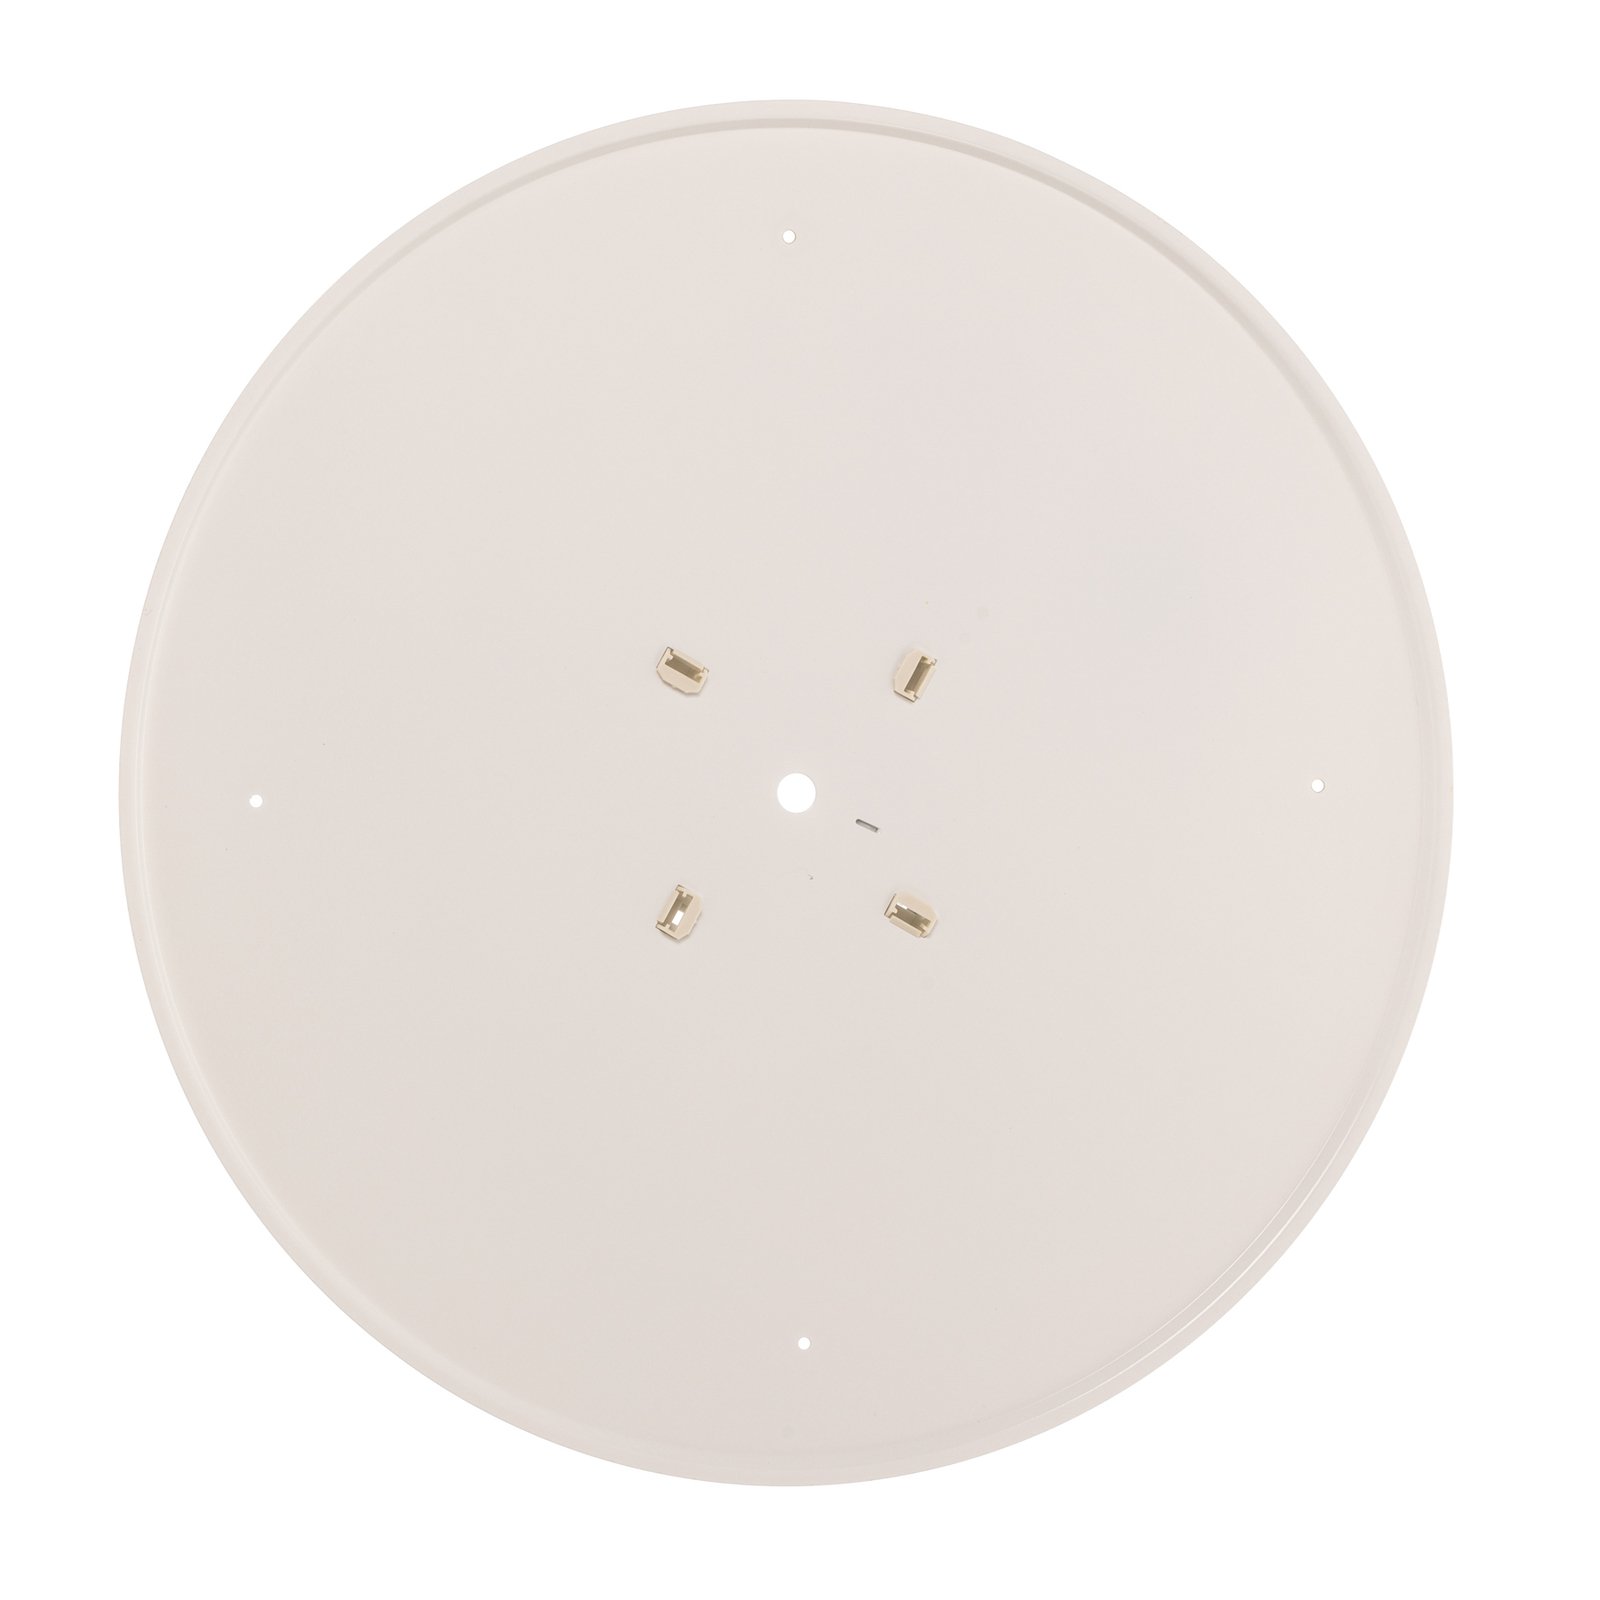 Cameron loftslampe, hvid, Ø 65 cm